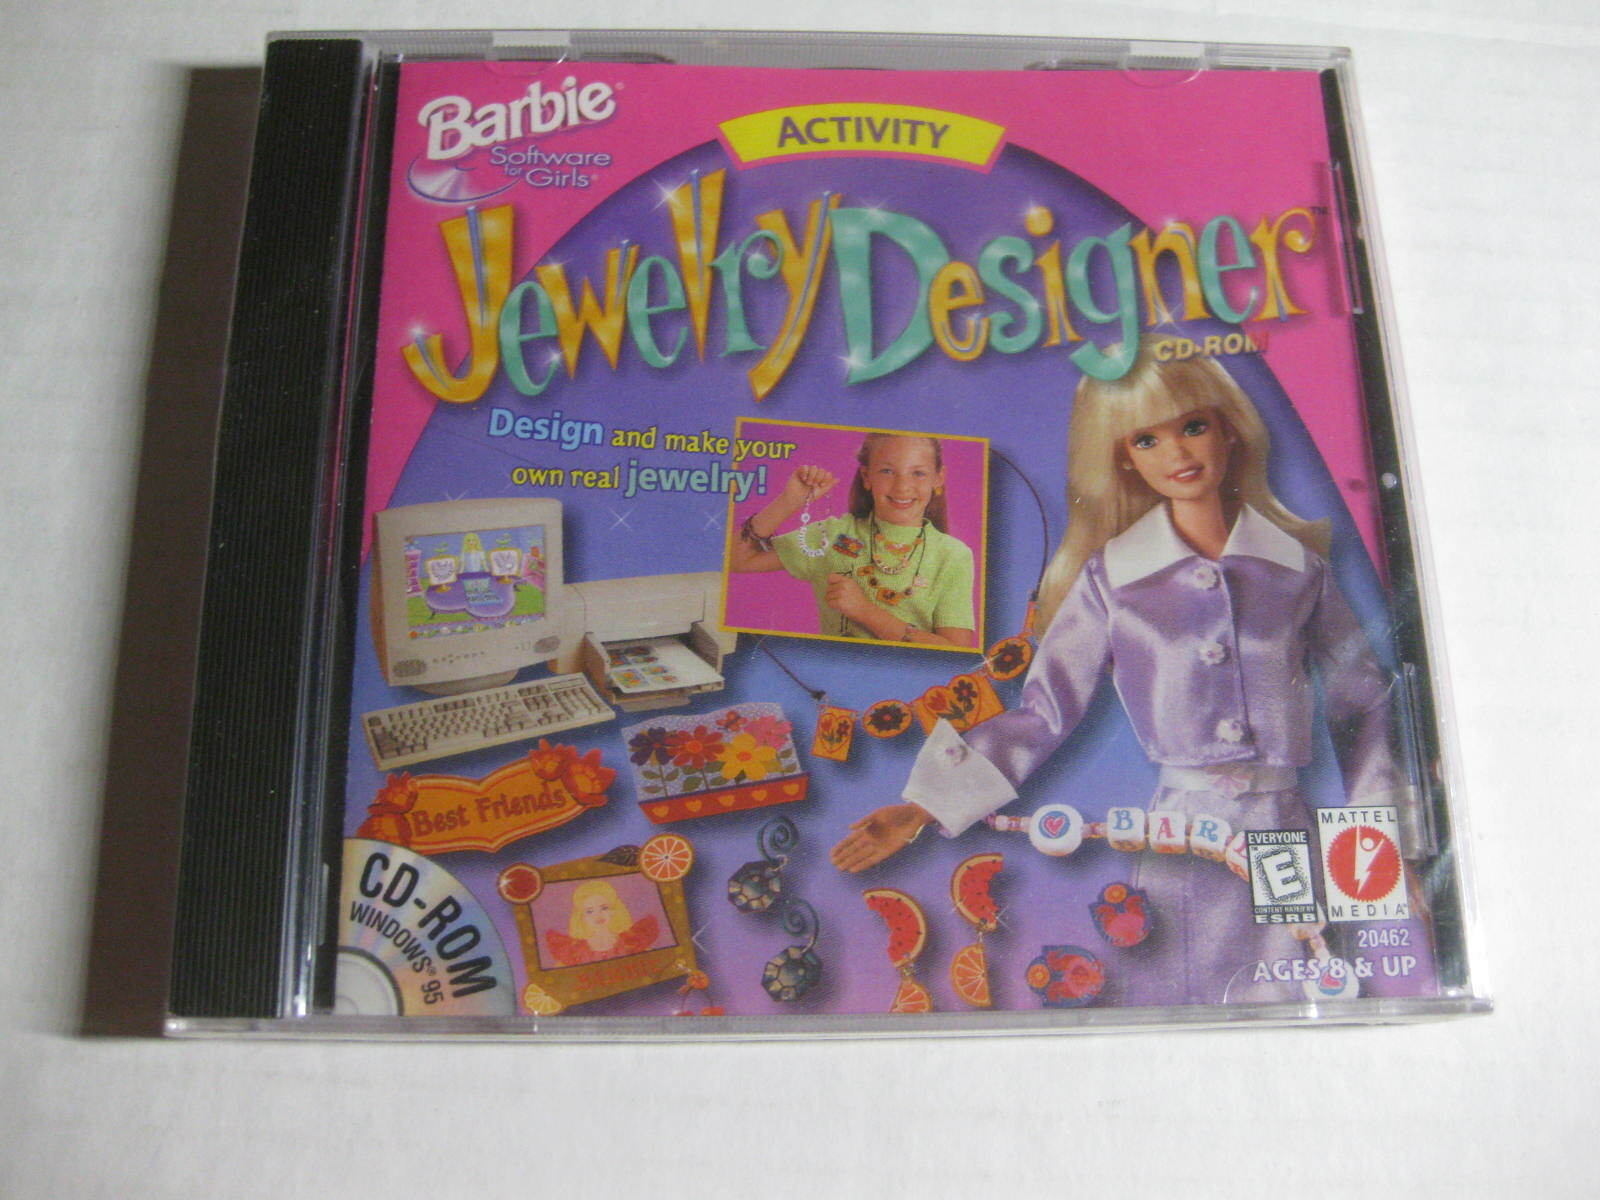 Barbie Software for girls Activity Jewelry Designer CD-ROM PC Windows 95  New